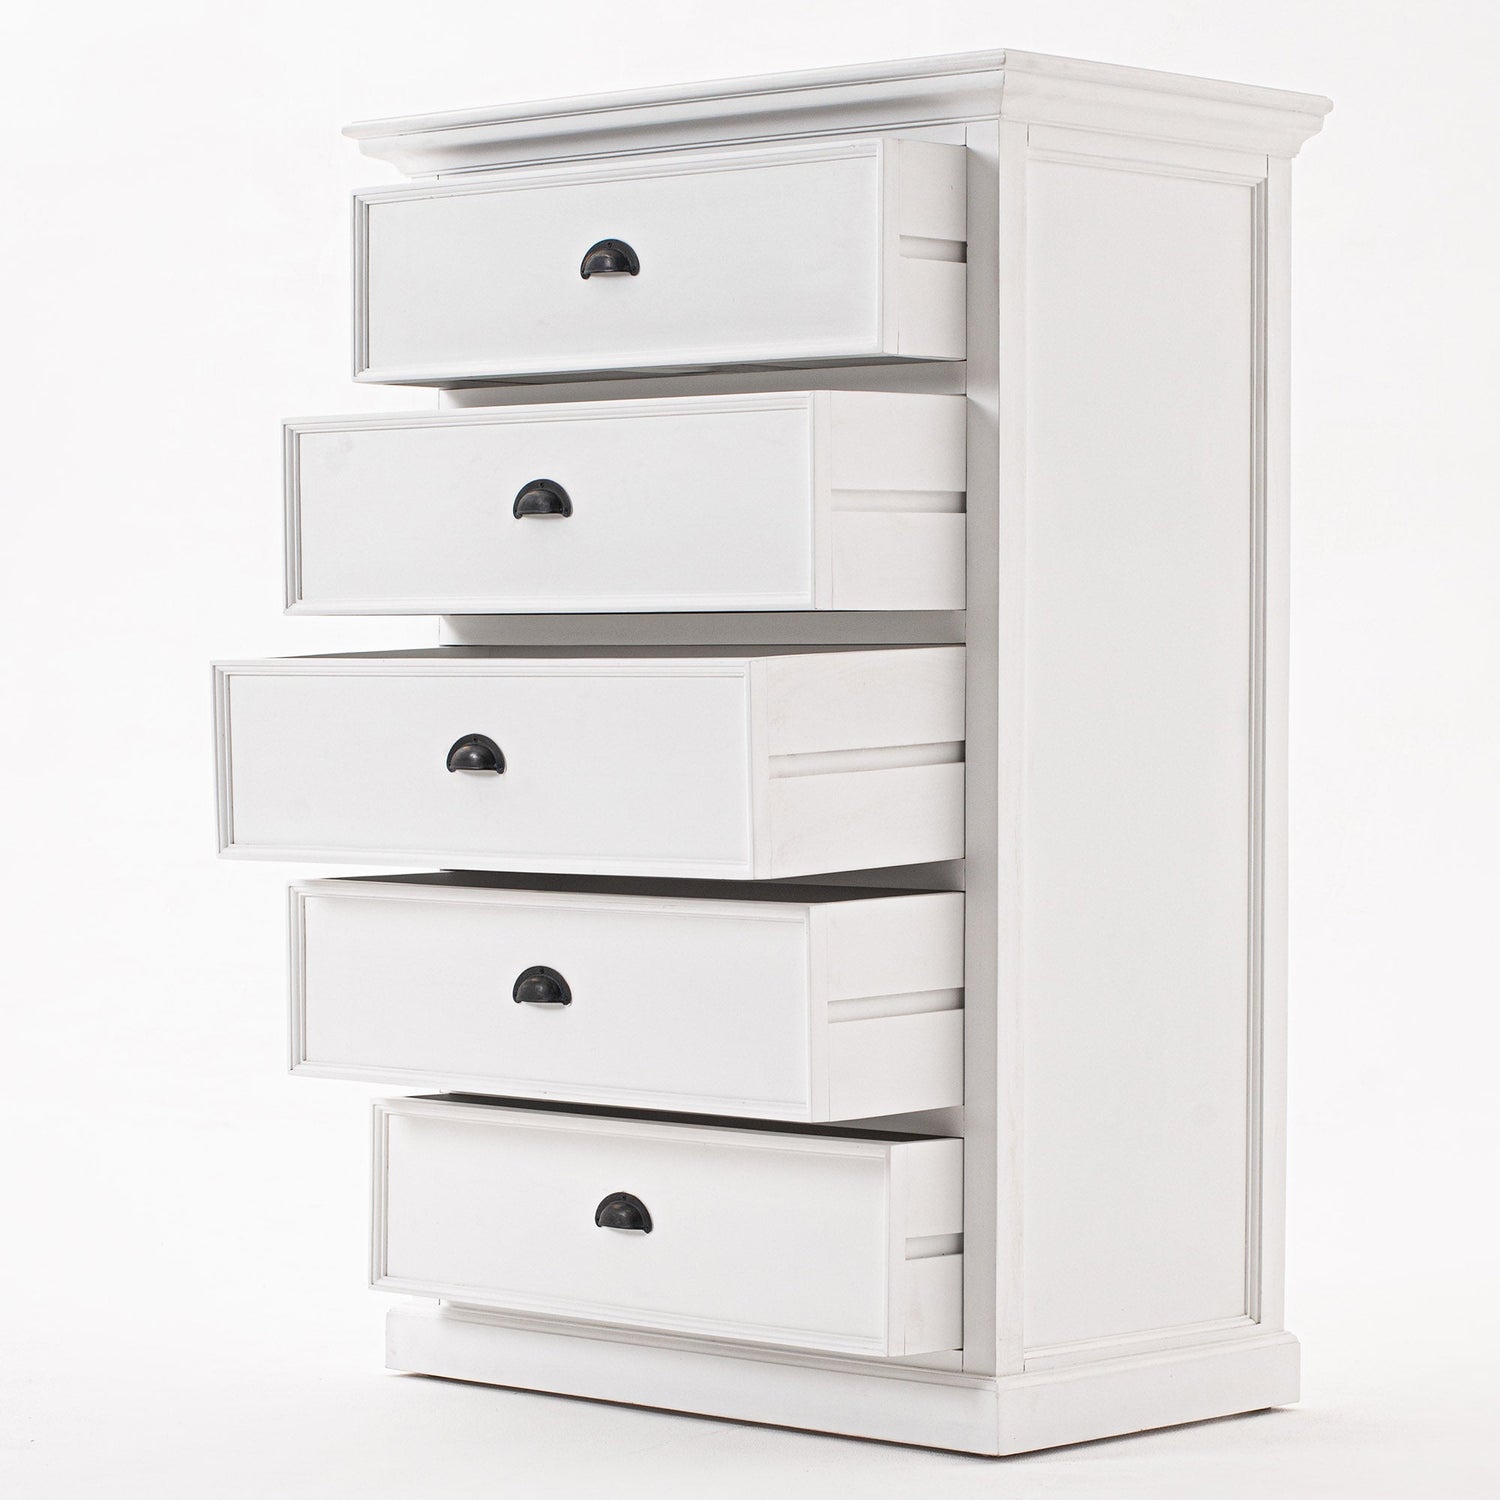 Halifax high dresser with 5 drawers